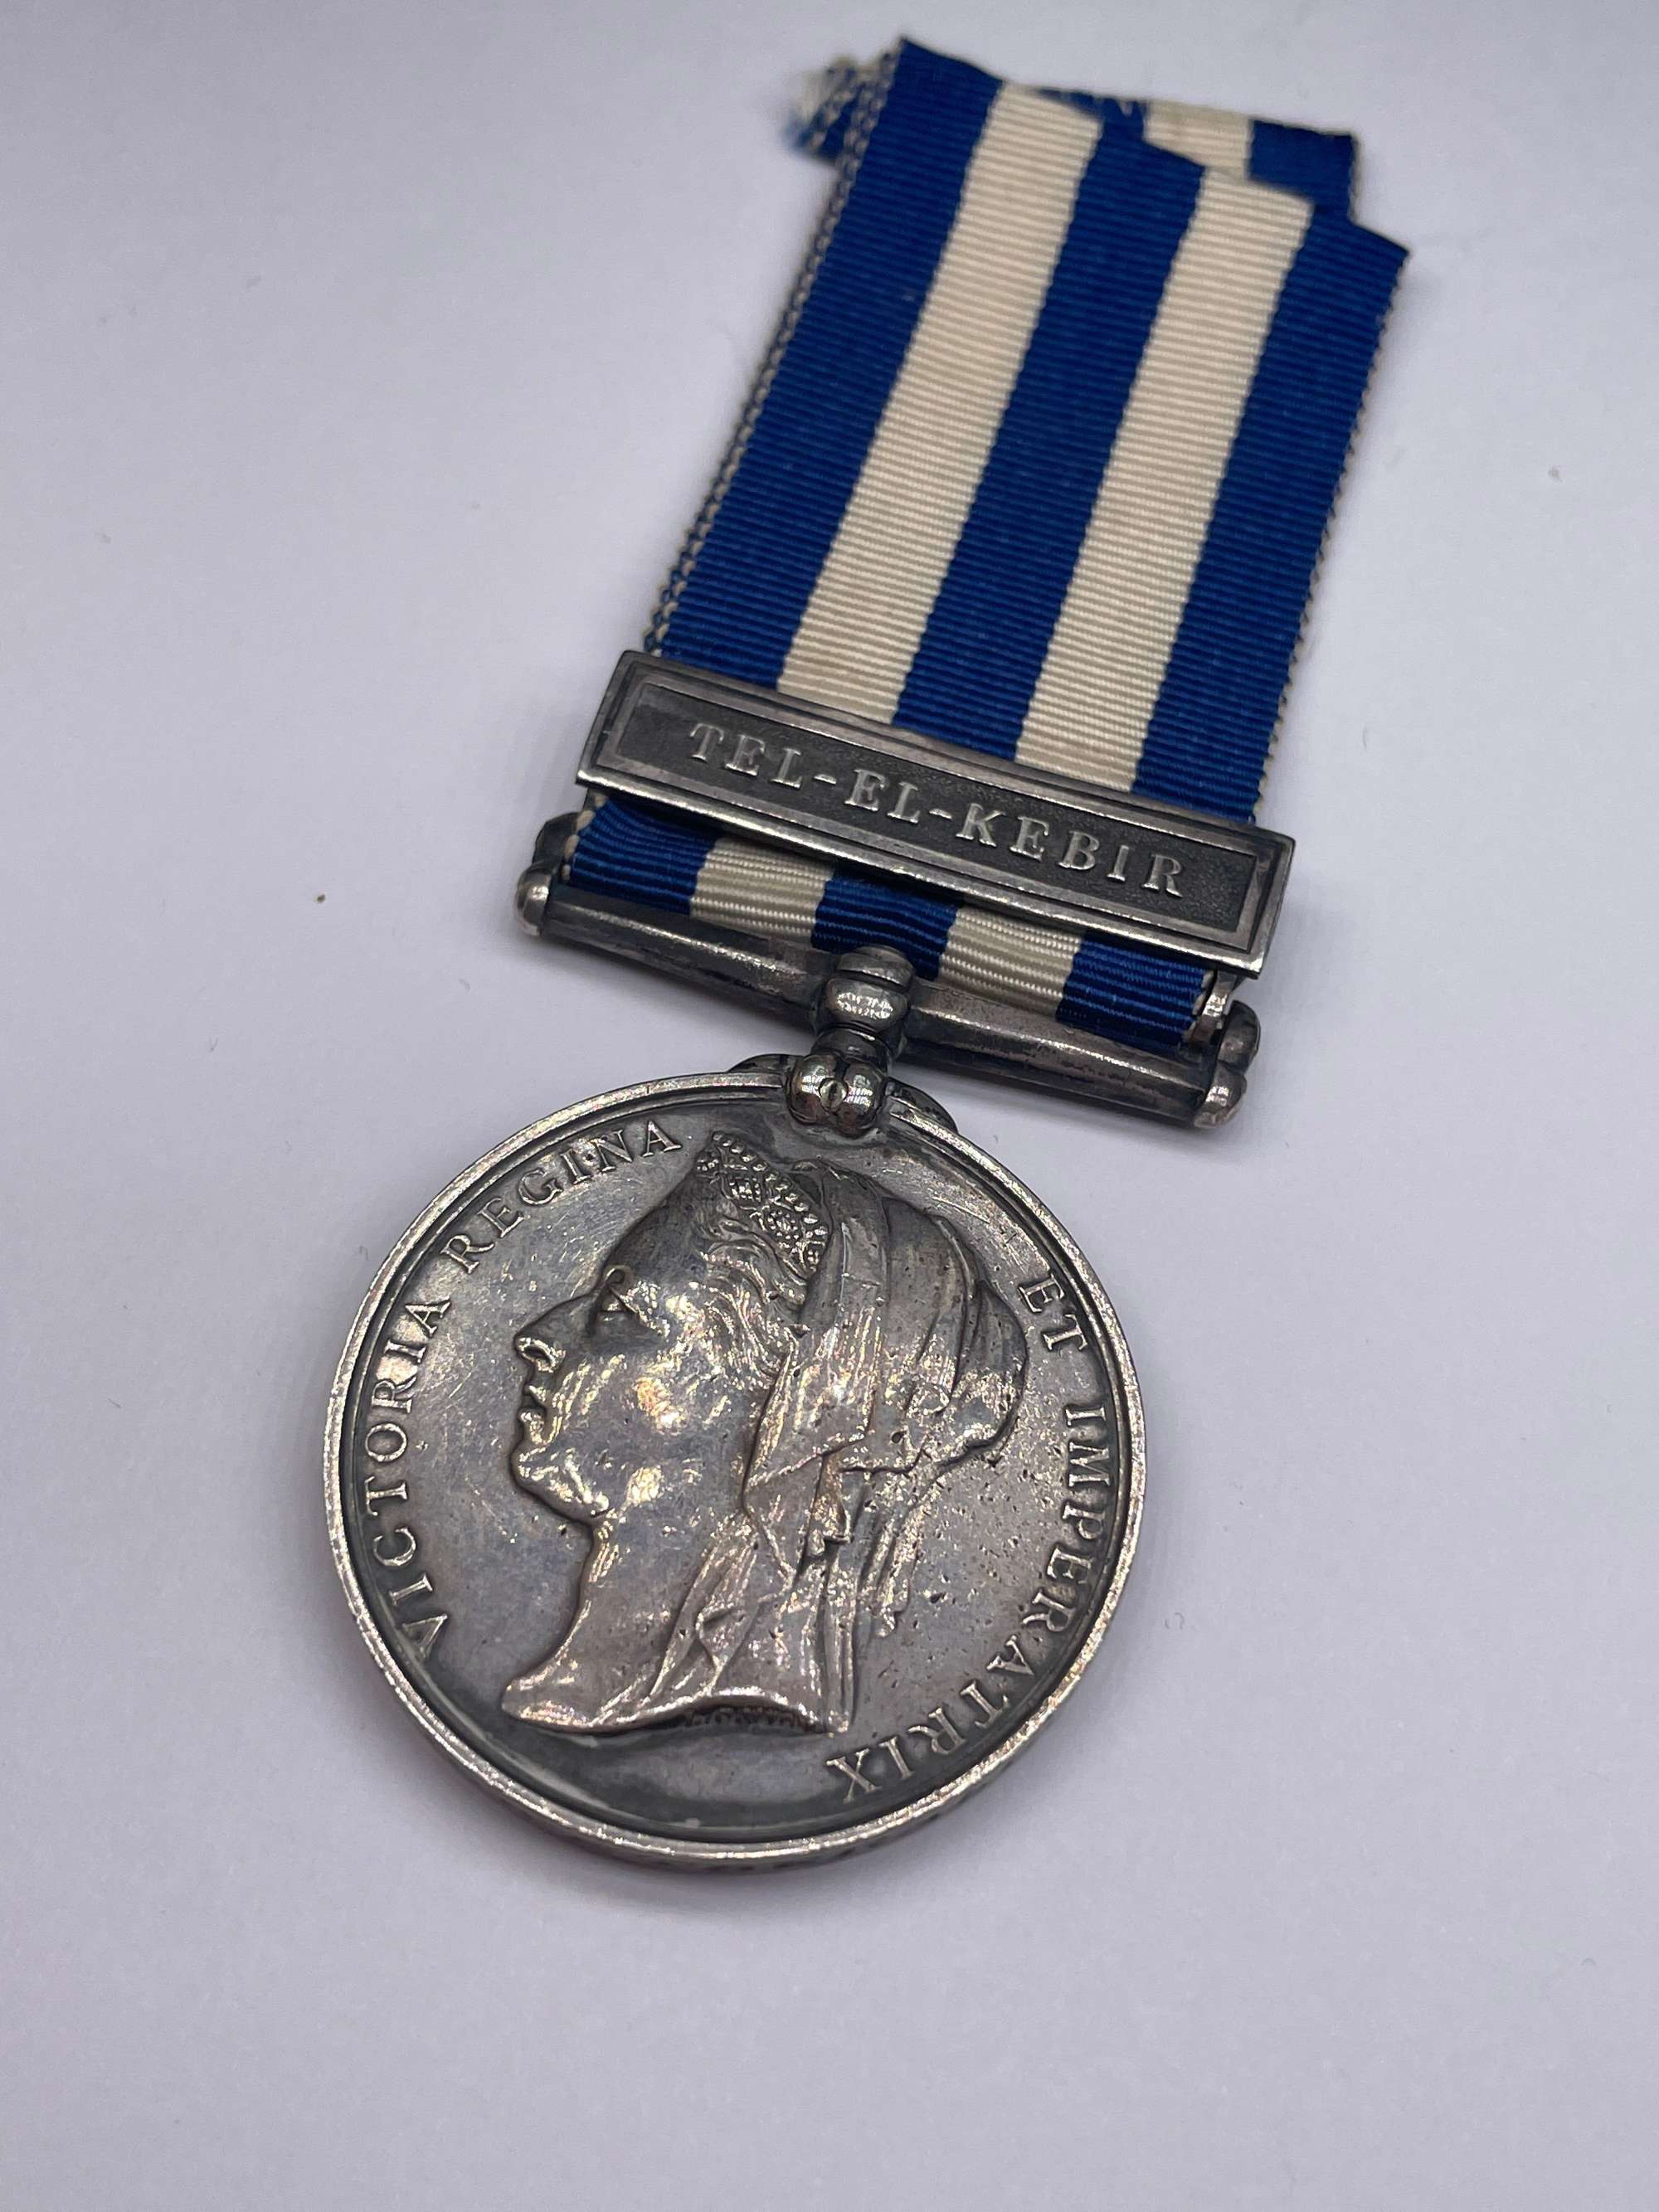 Original Egypt Medal, Tel-El-Kebir Clasp, Dvr Wetherall